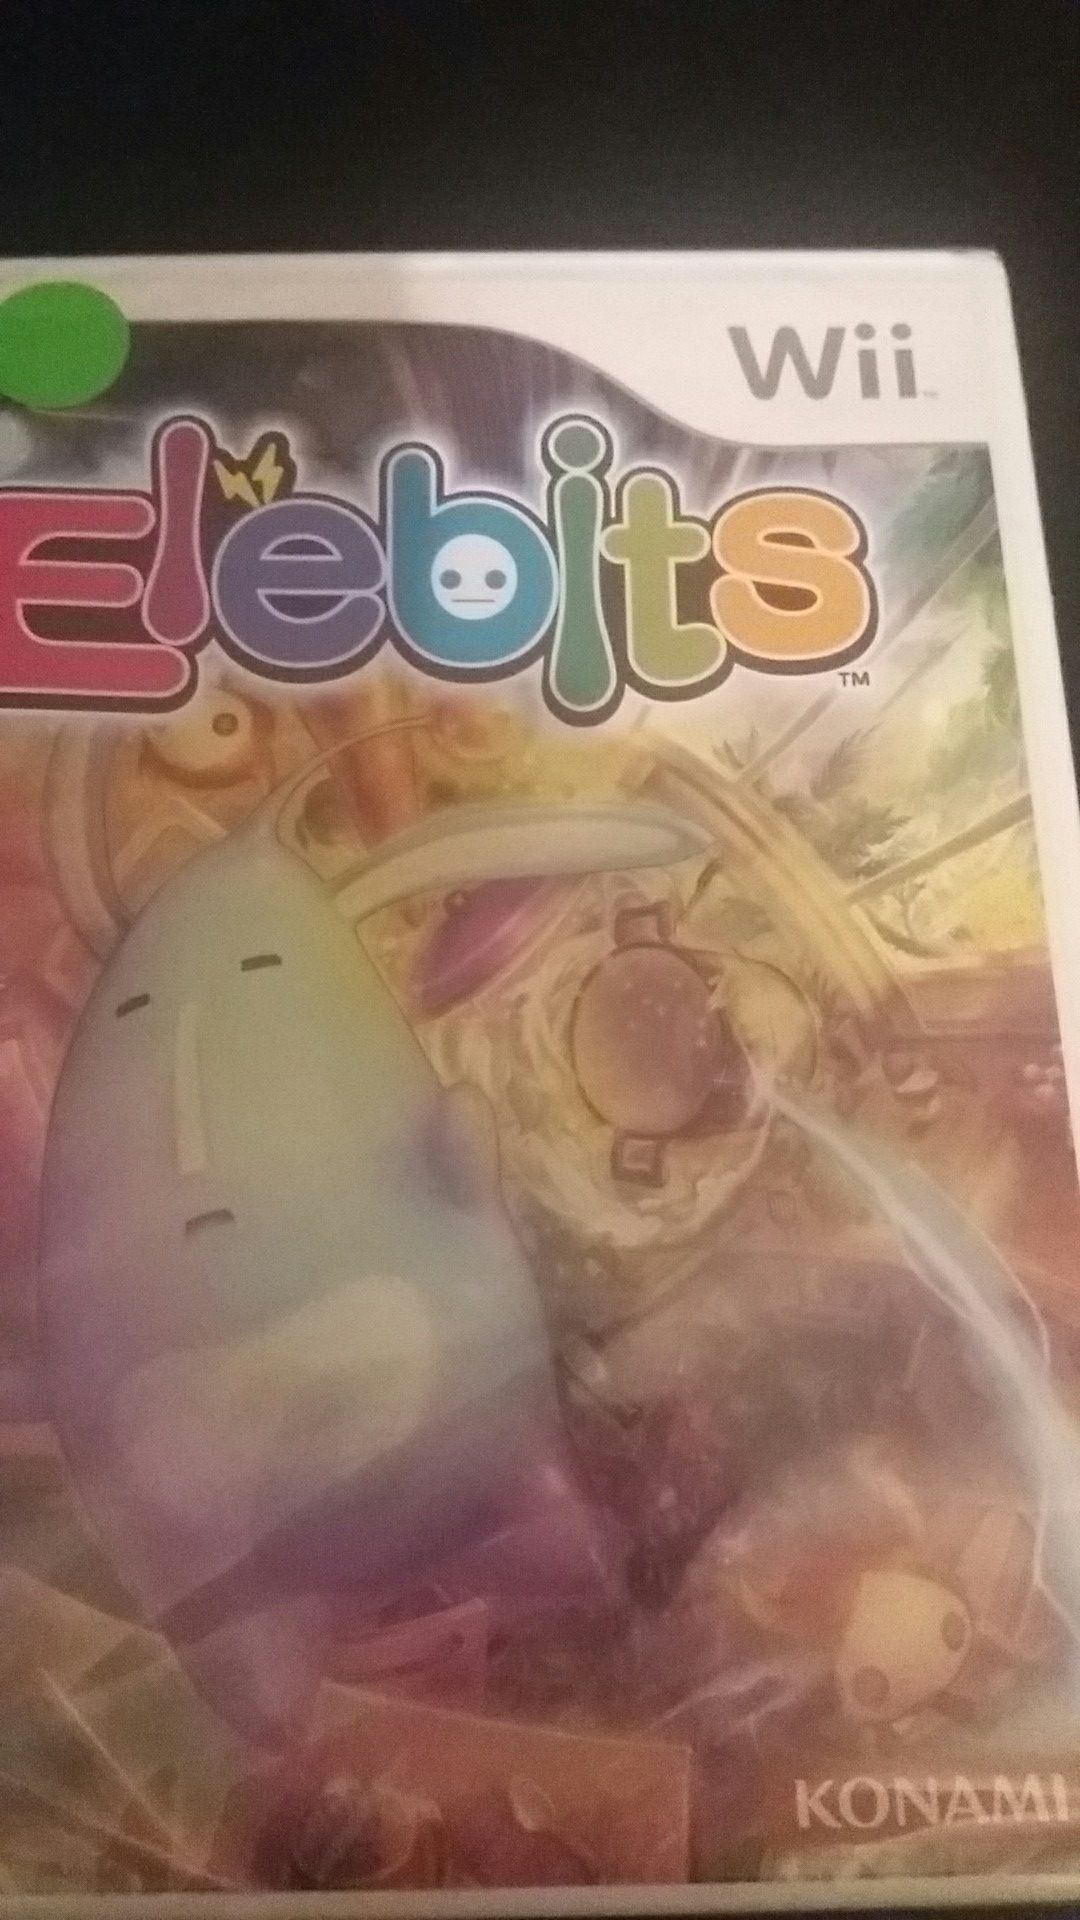 ELEBITS (Nintendo Wii + Wii U) NEW!